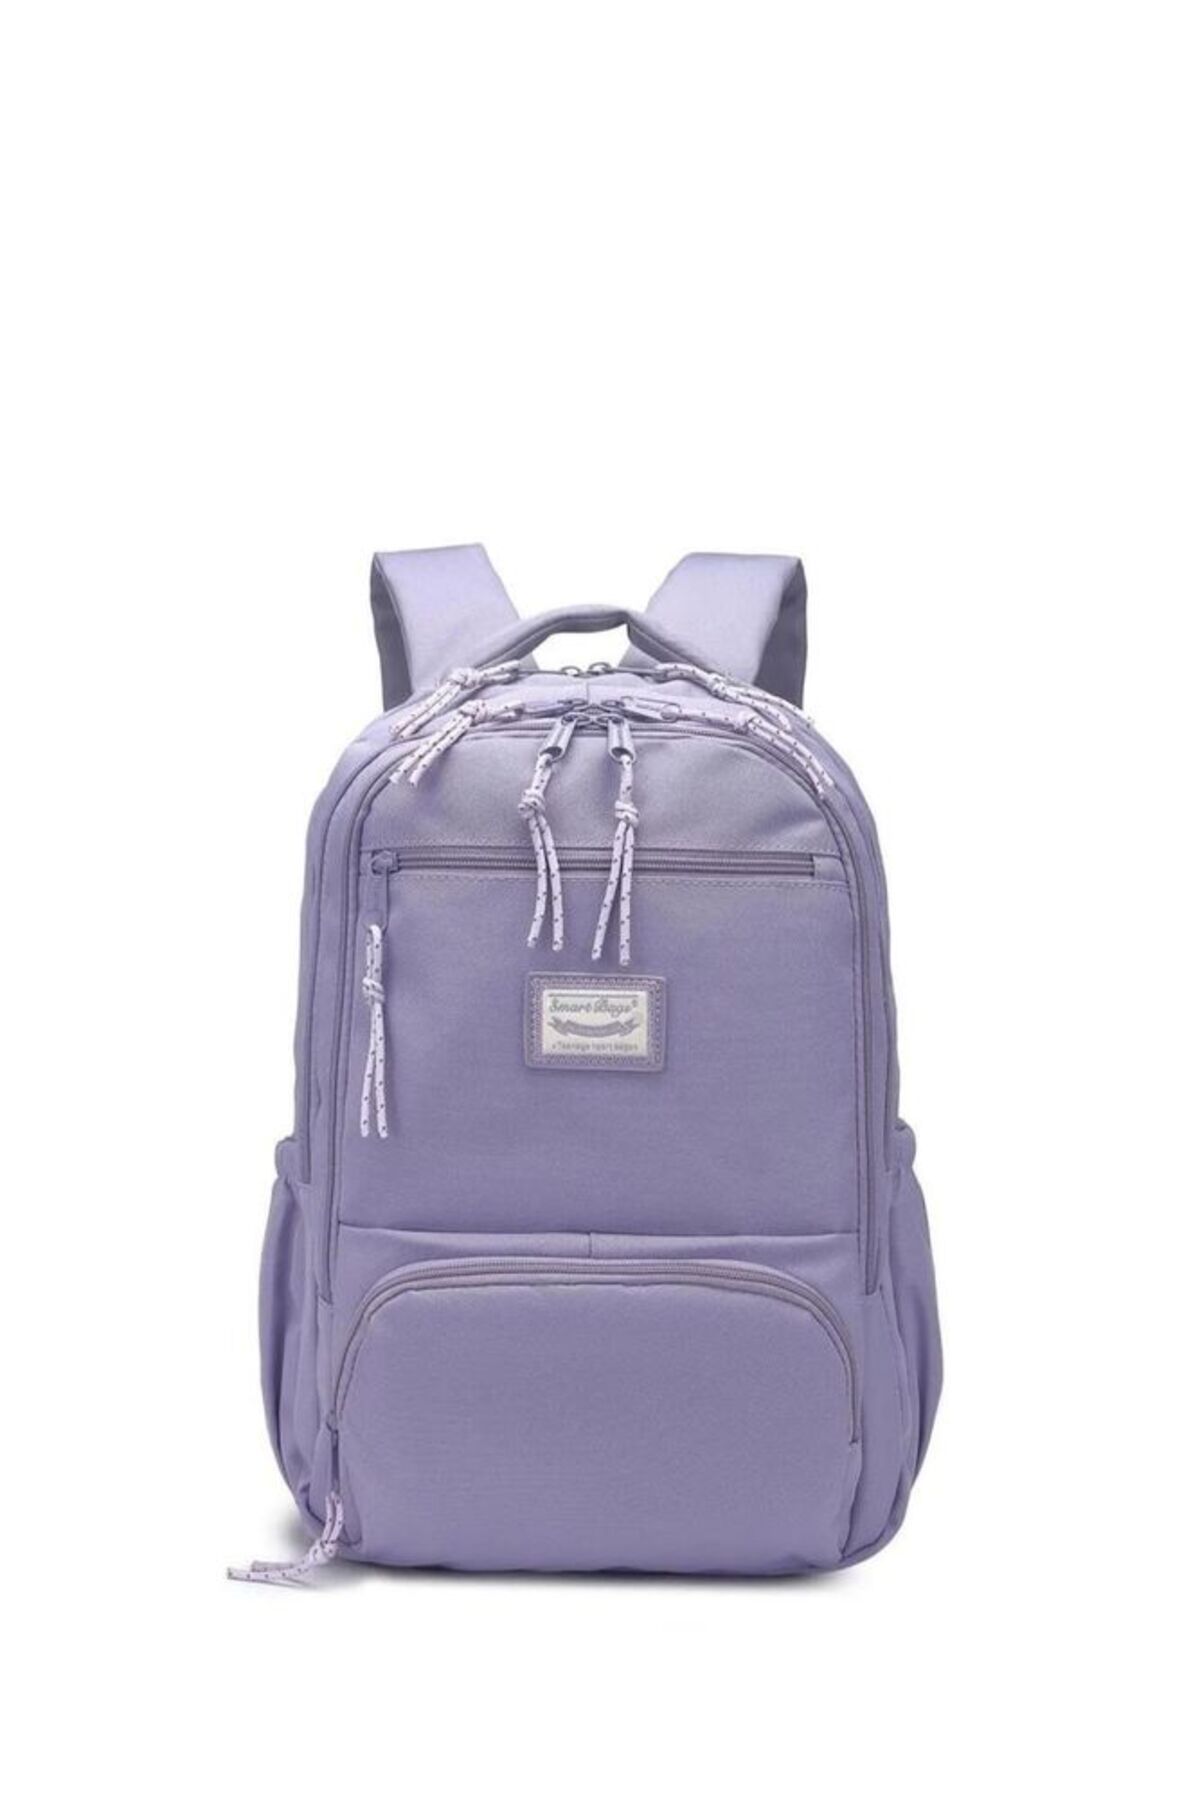 HAWEE Anti Theft Backpack Purse for Women Purple Travel Daypack Cross Body  Sling Bag Waterproof - Walmart.com